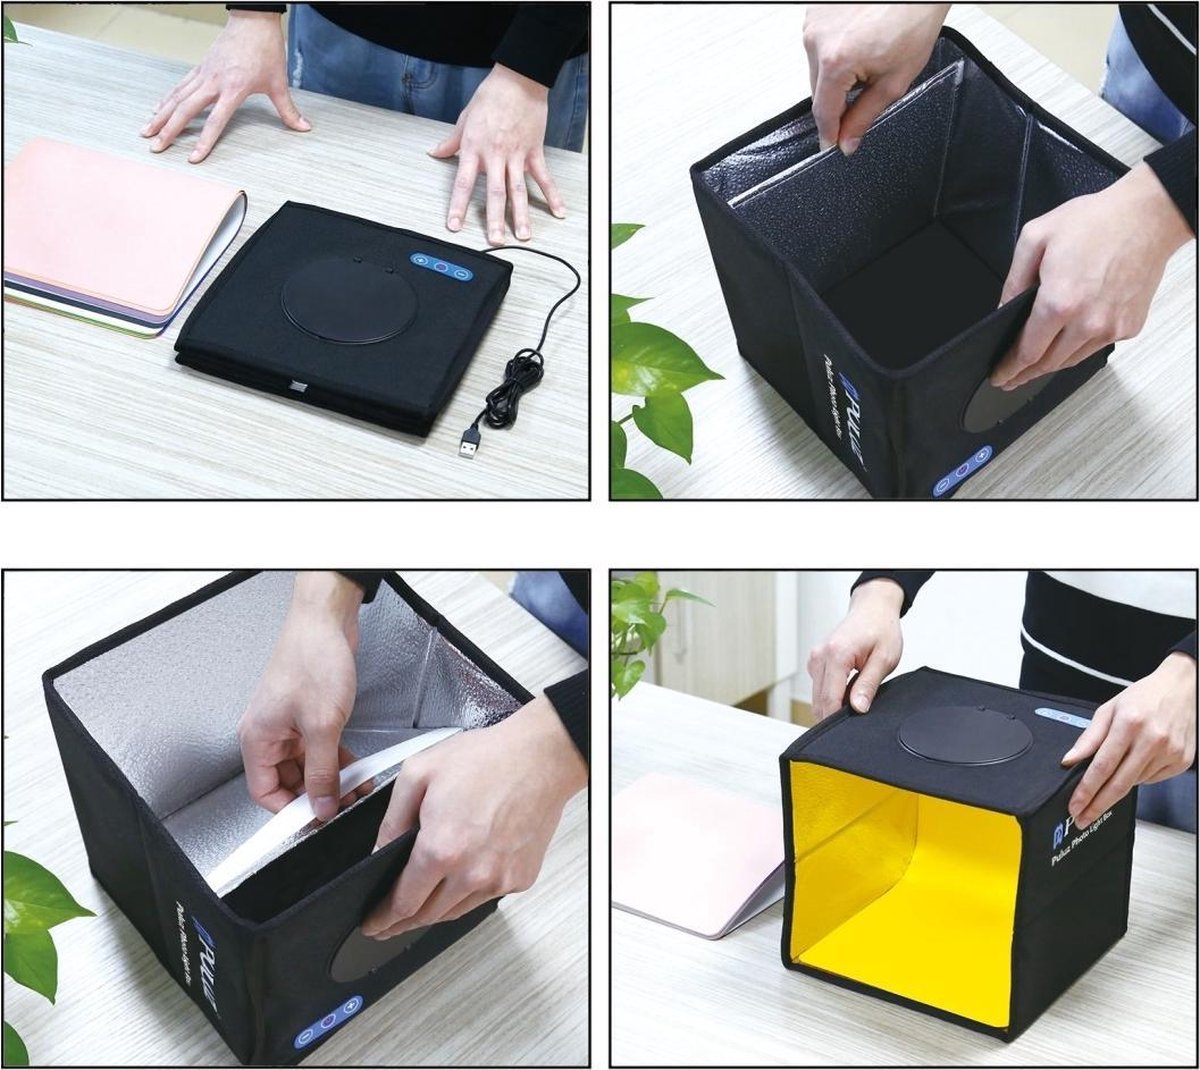 Puluz professionele fotostudio box – Fotobox – Fotostudio – Fotografie – Fotografie accessoires - 25 x 25 x 25 cm – LED verlichting – 6 kleuren achtergronden - PULUZ